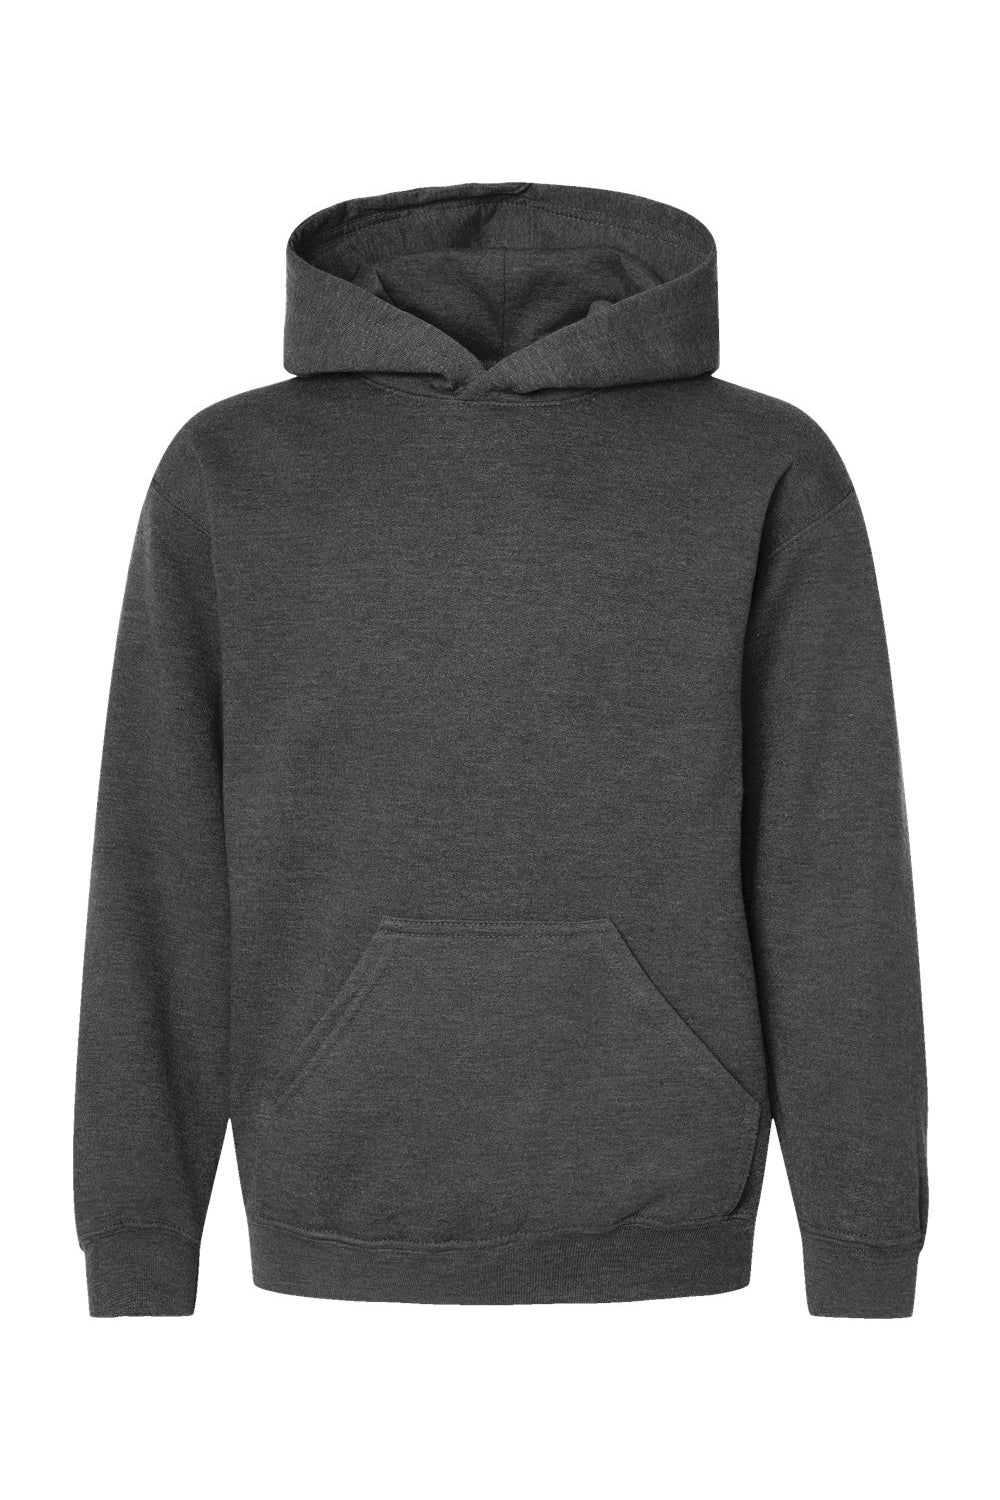 Tultex 320Y Youth Hooded Sweatshirt Hoodie Heather Charcoal Grey Flat Front